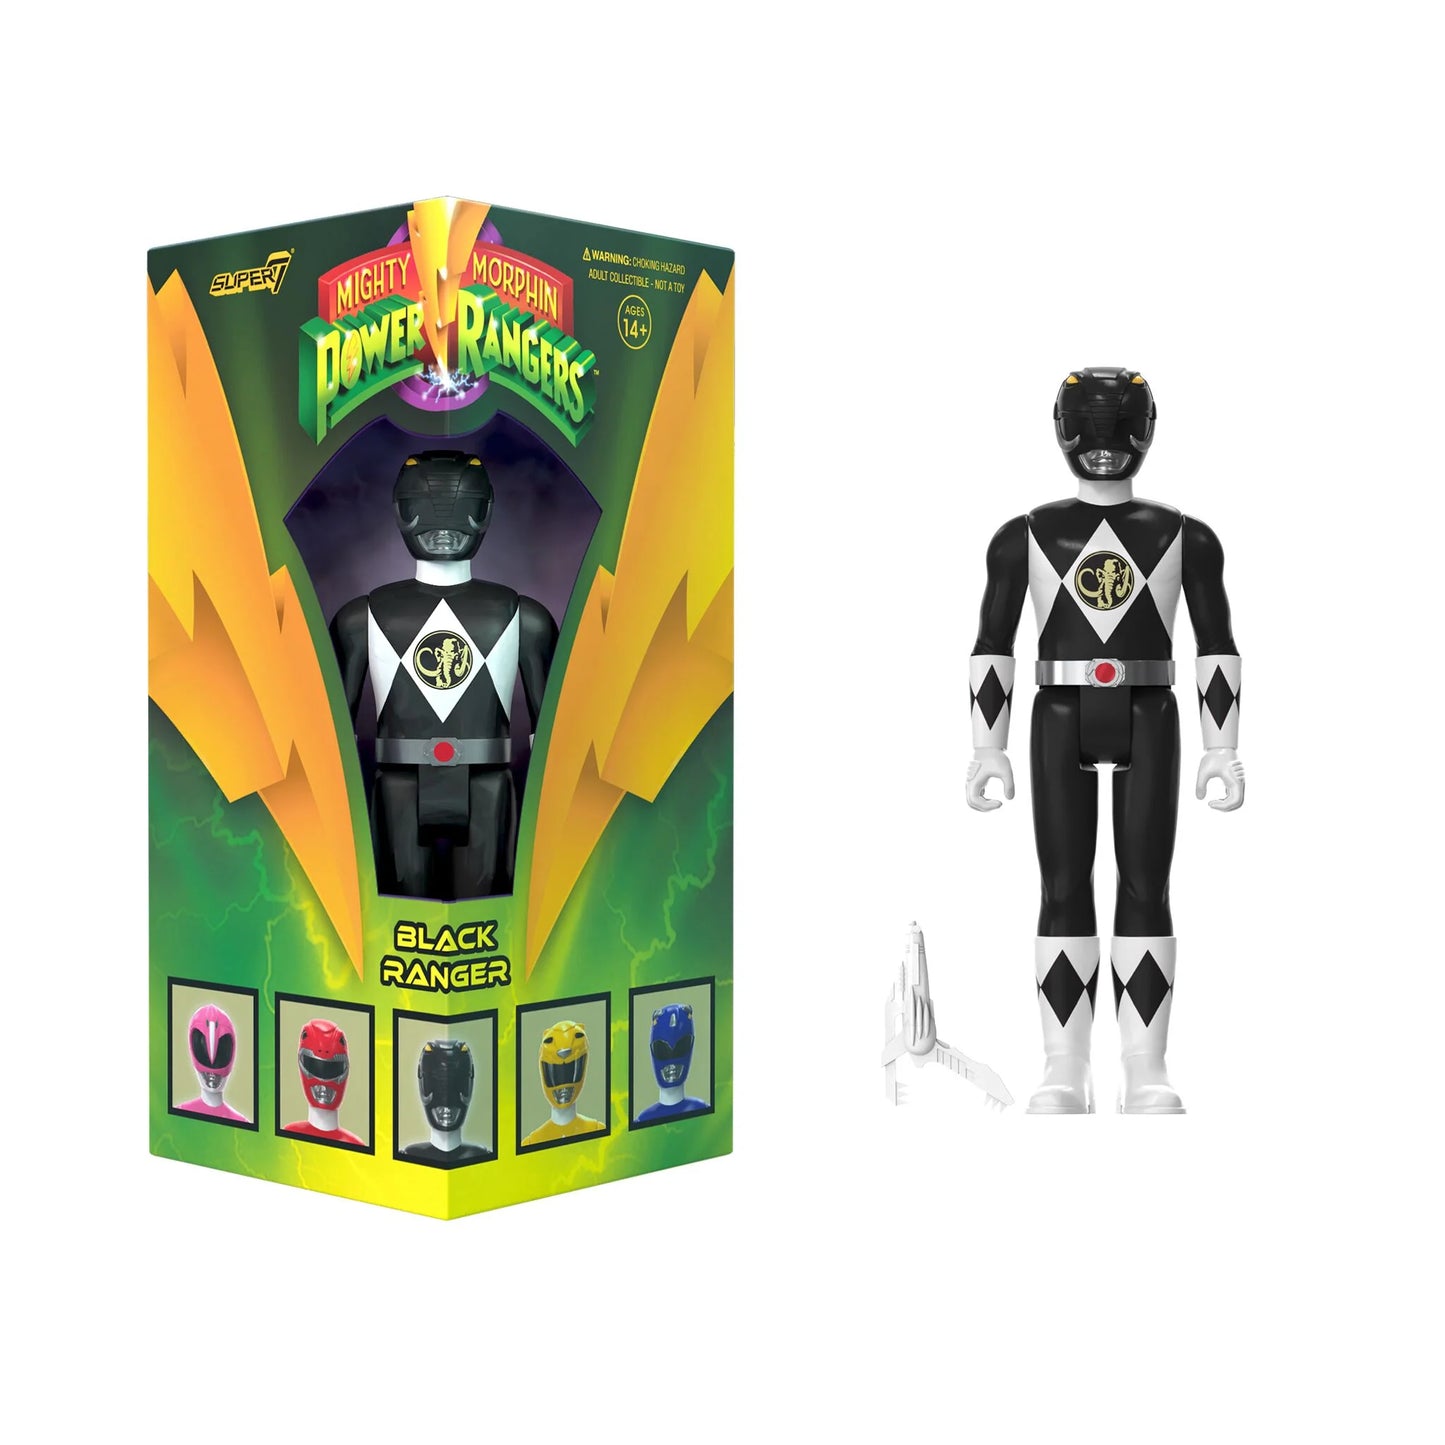 MMPR - Black Ranger (Triangle Box) - Super 7 Action Figure